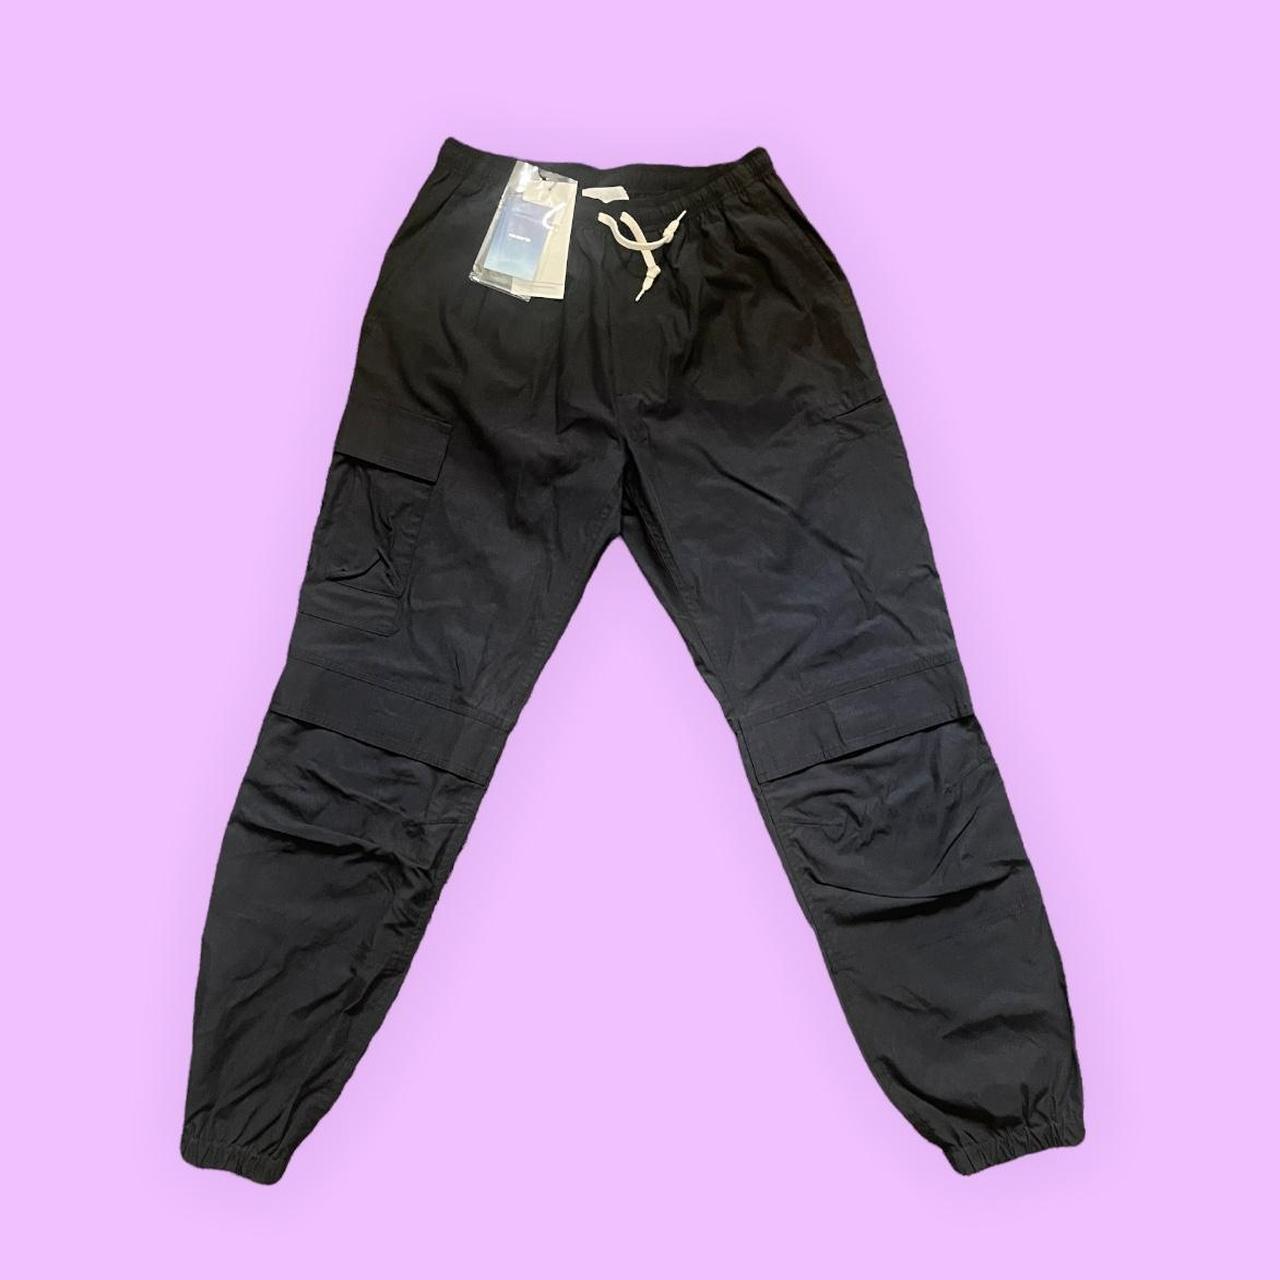 Product Image 1 - John Elliott Himalayan pants 
New